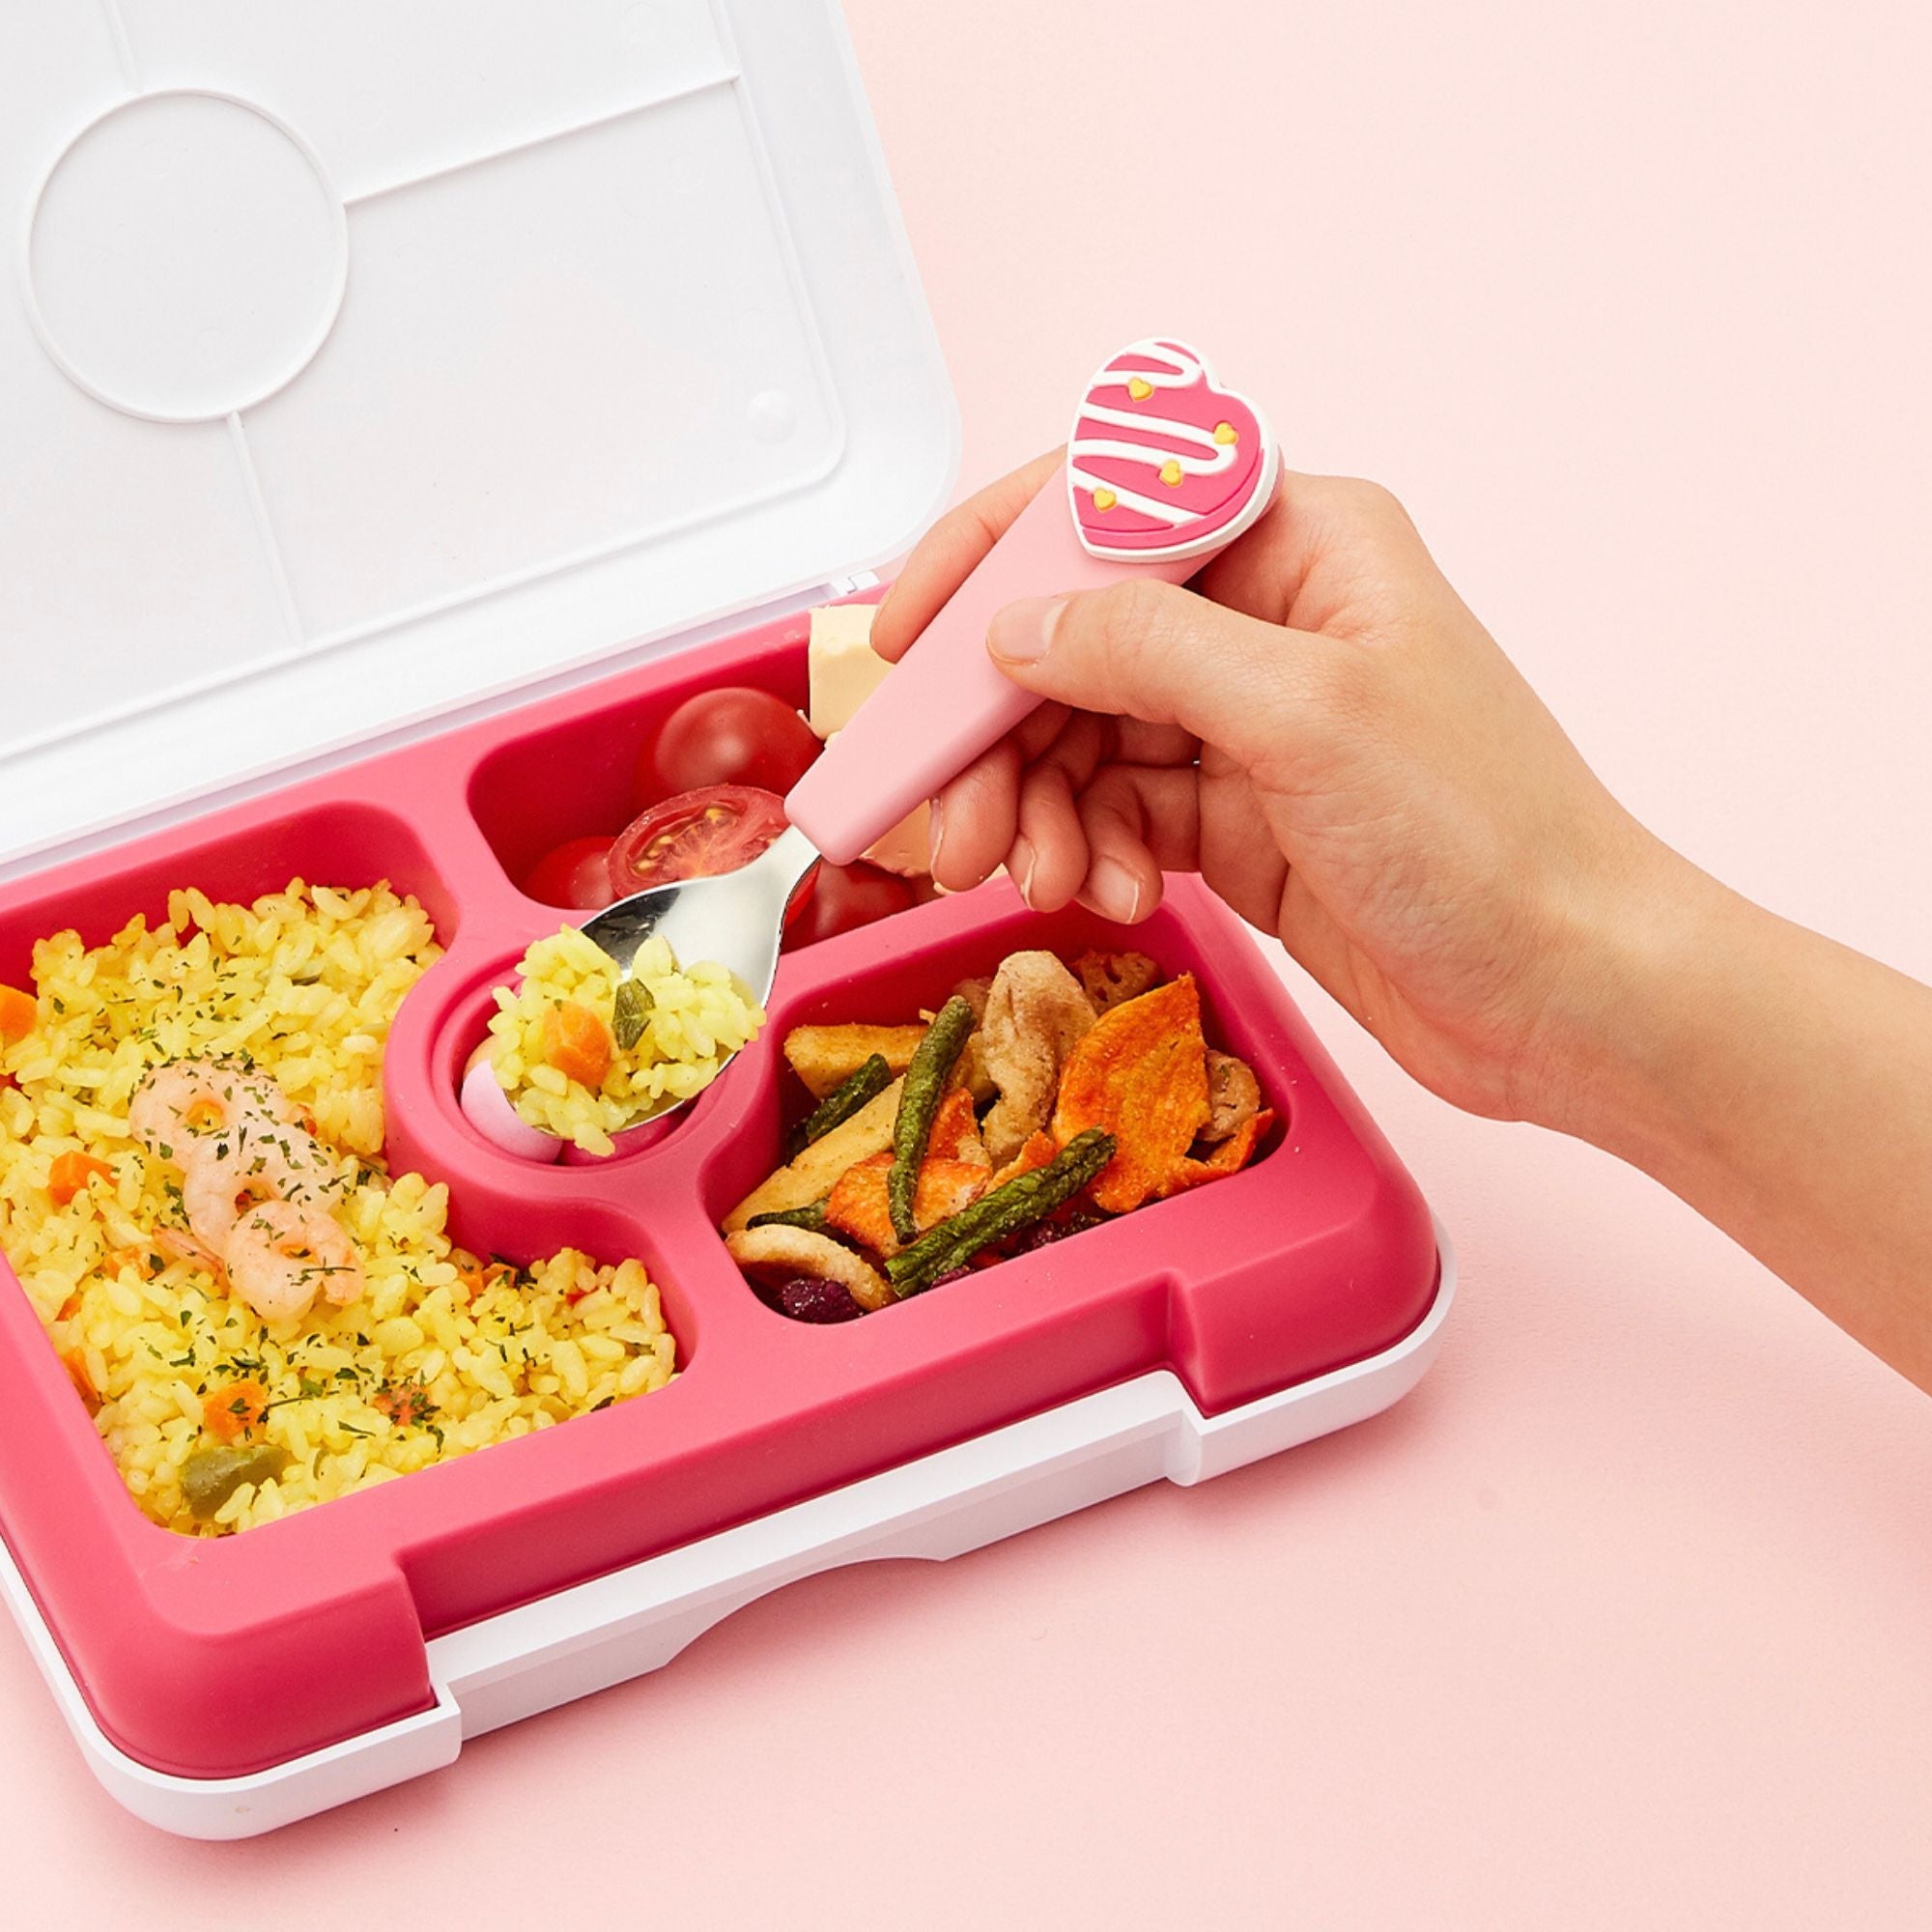 Stainless Steel Bento Lunch Box for Kids by Innobaby - Fish – innobaby